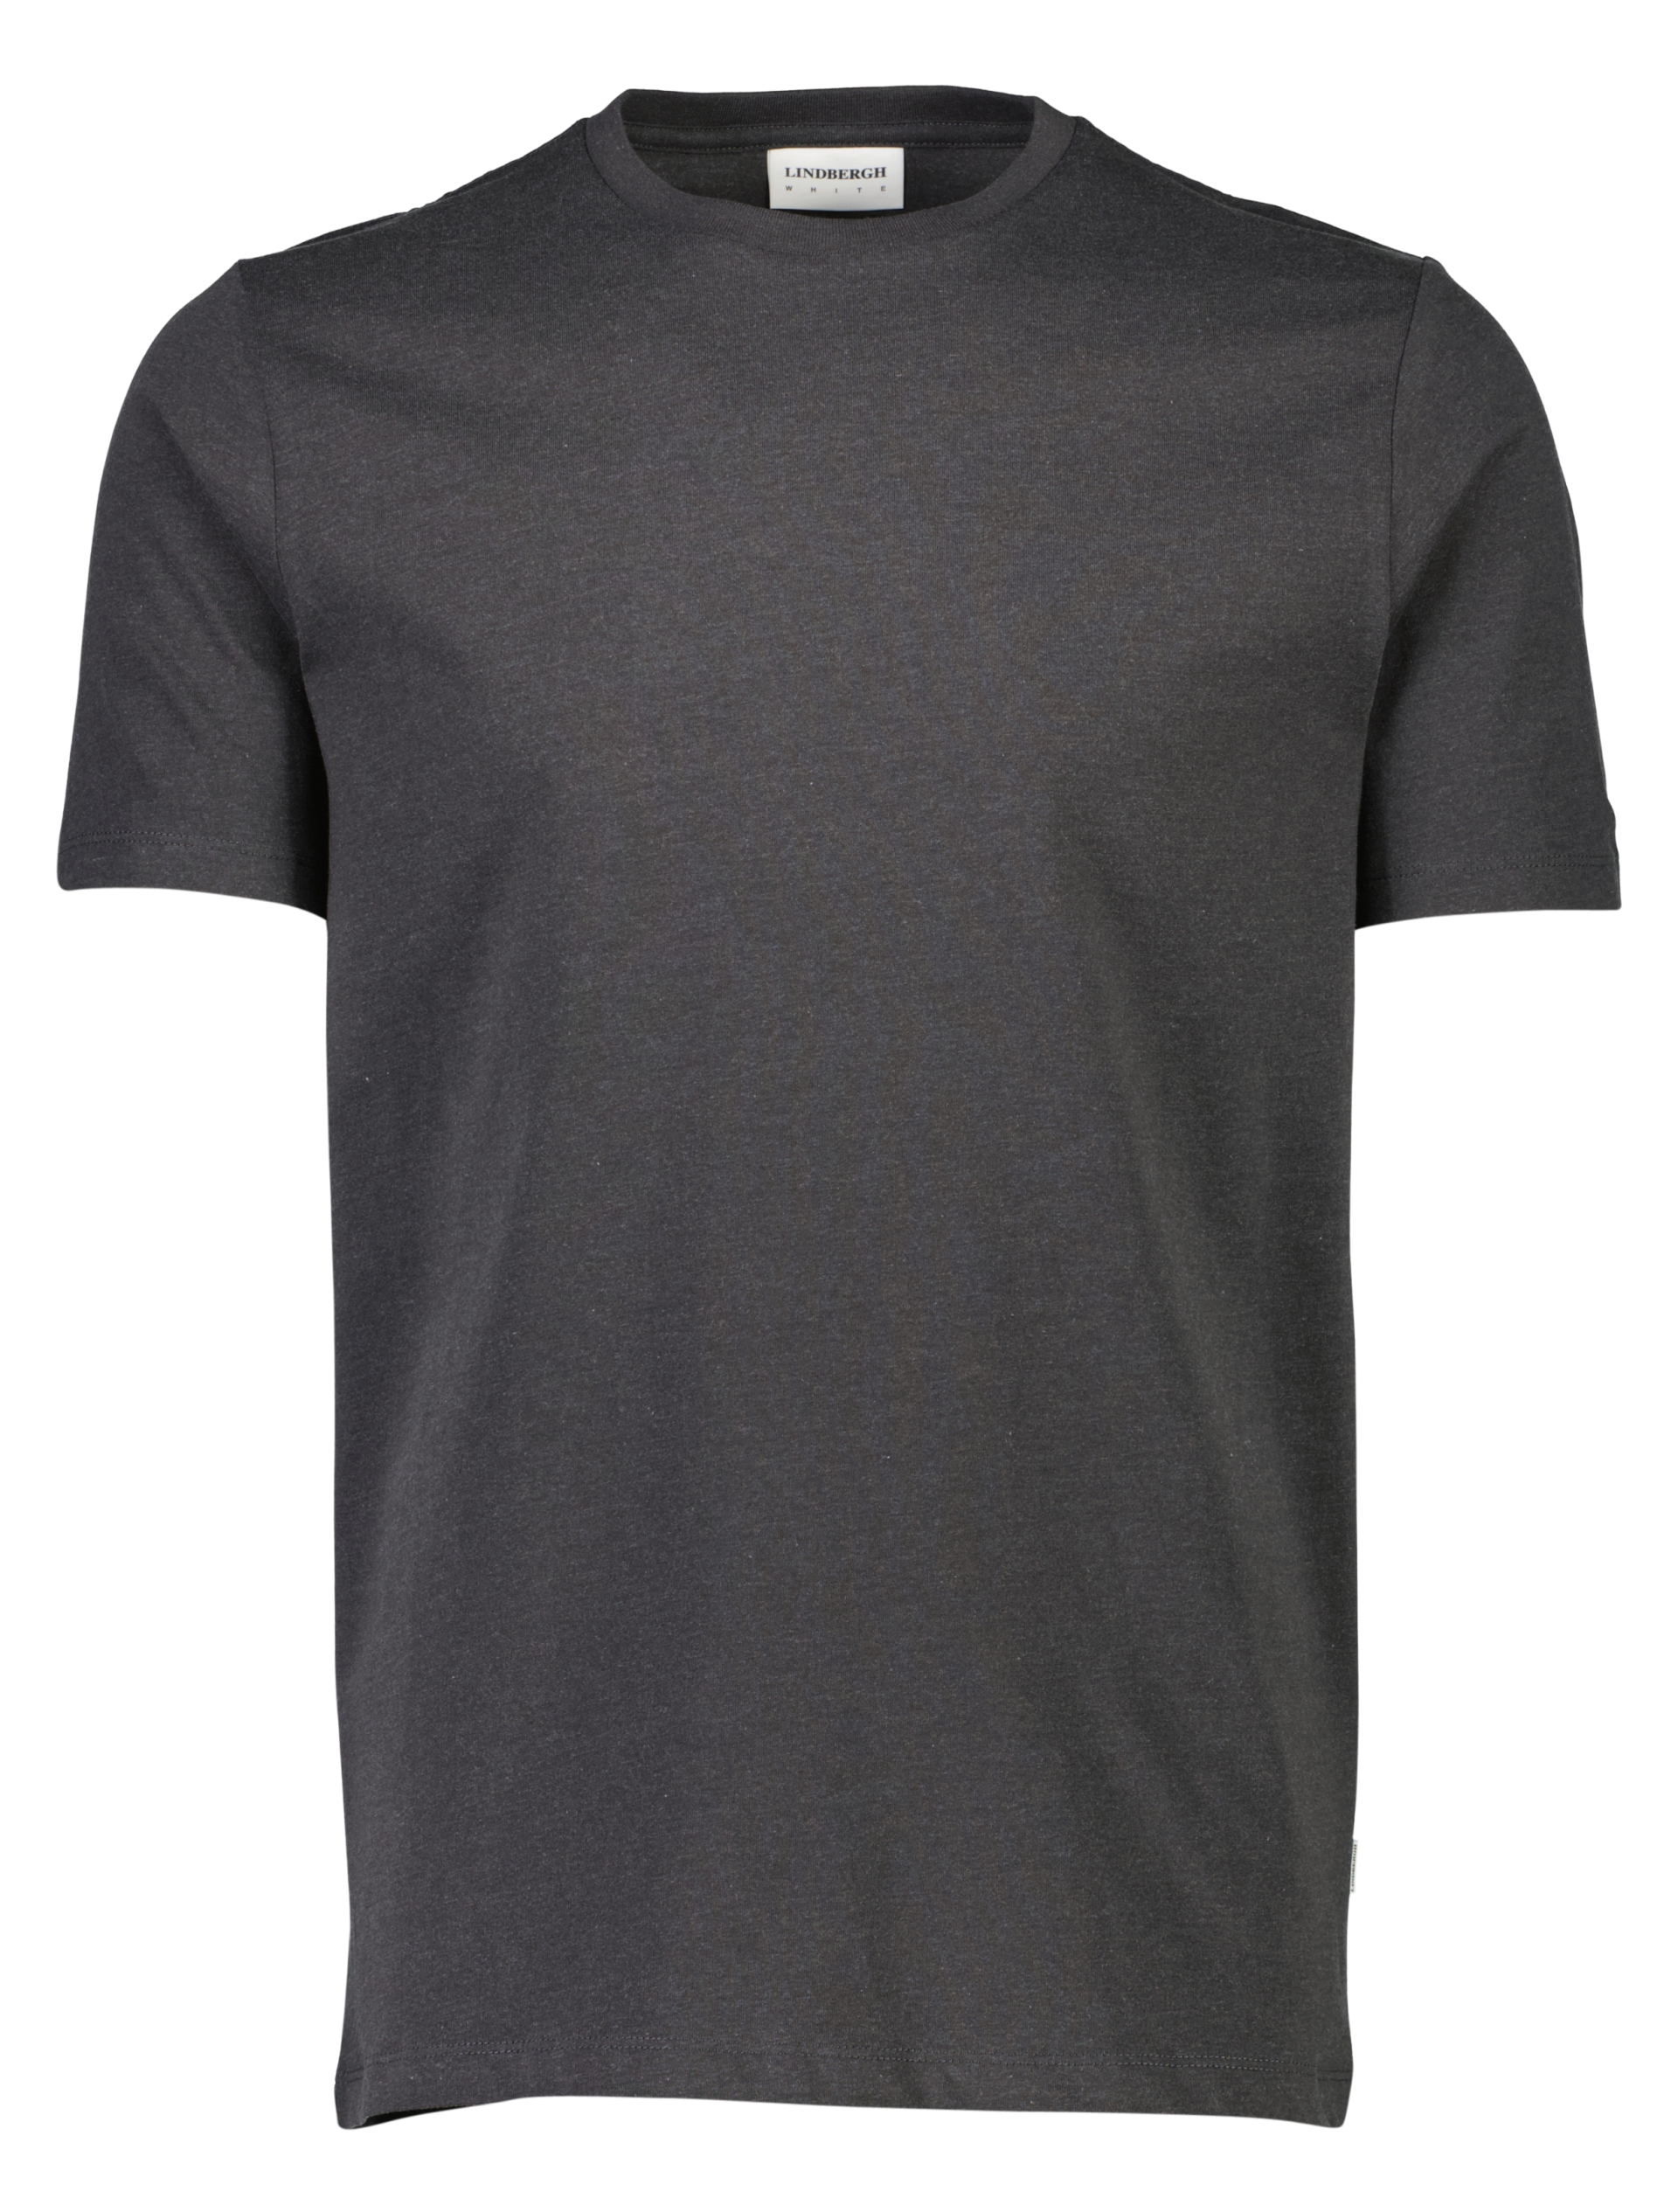 Lindbergh T-shirt sort / black mel